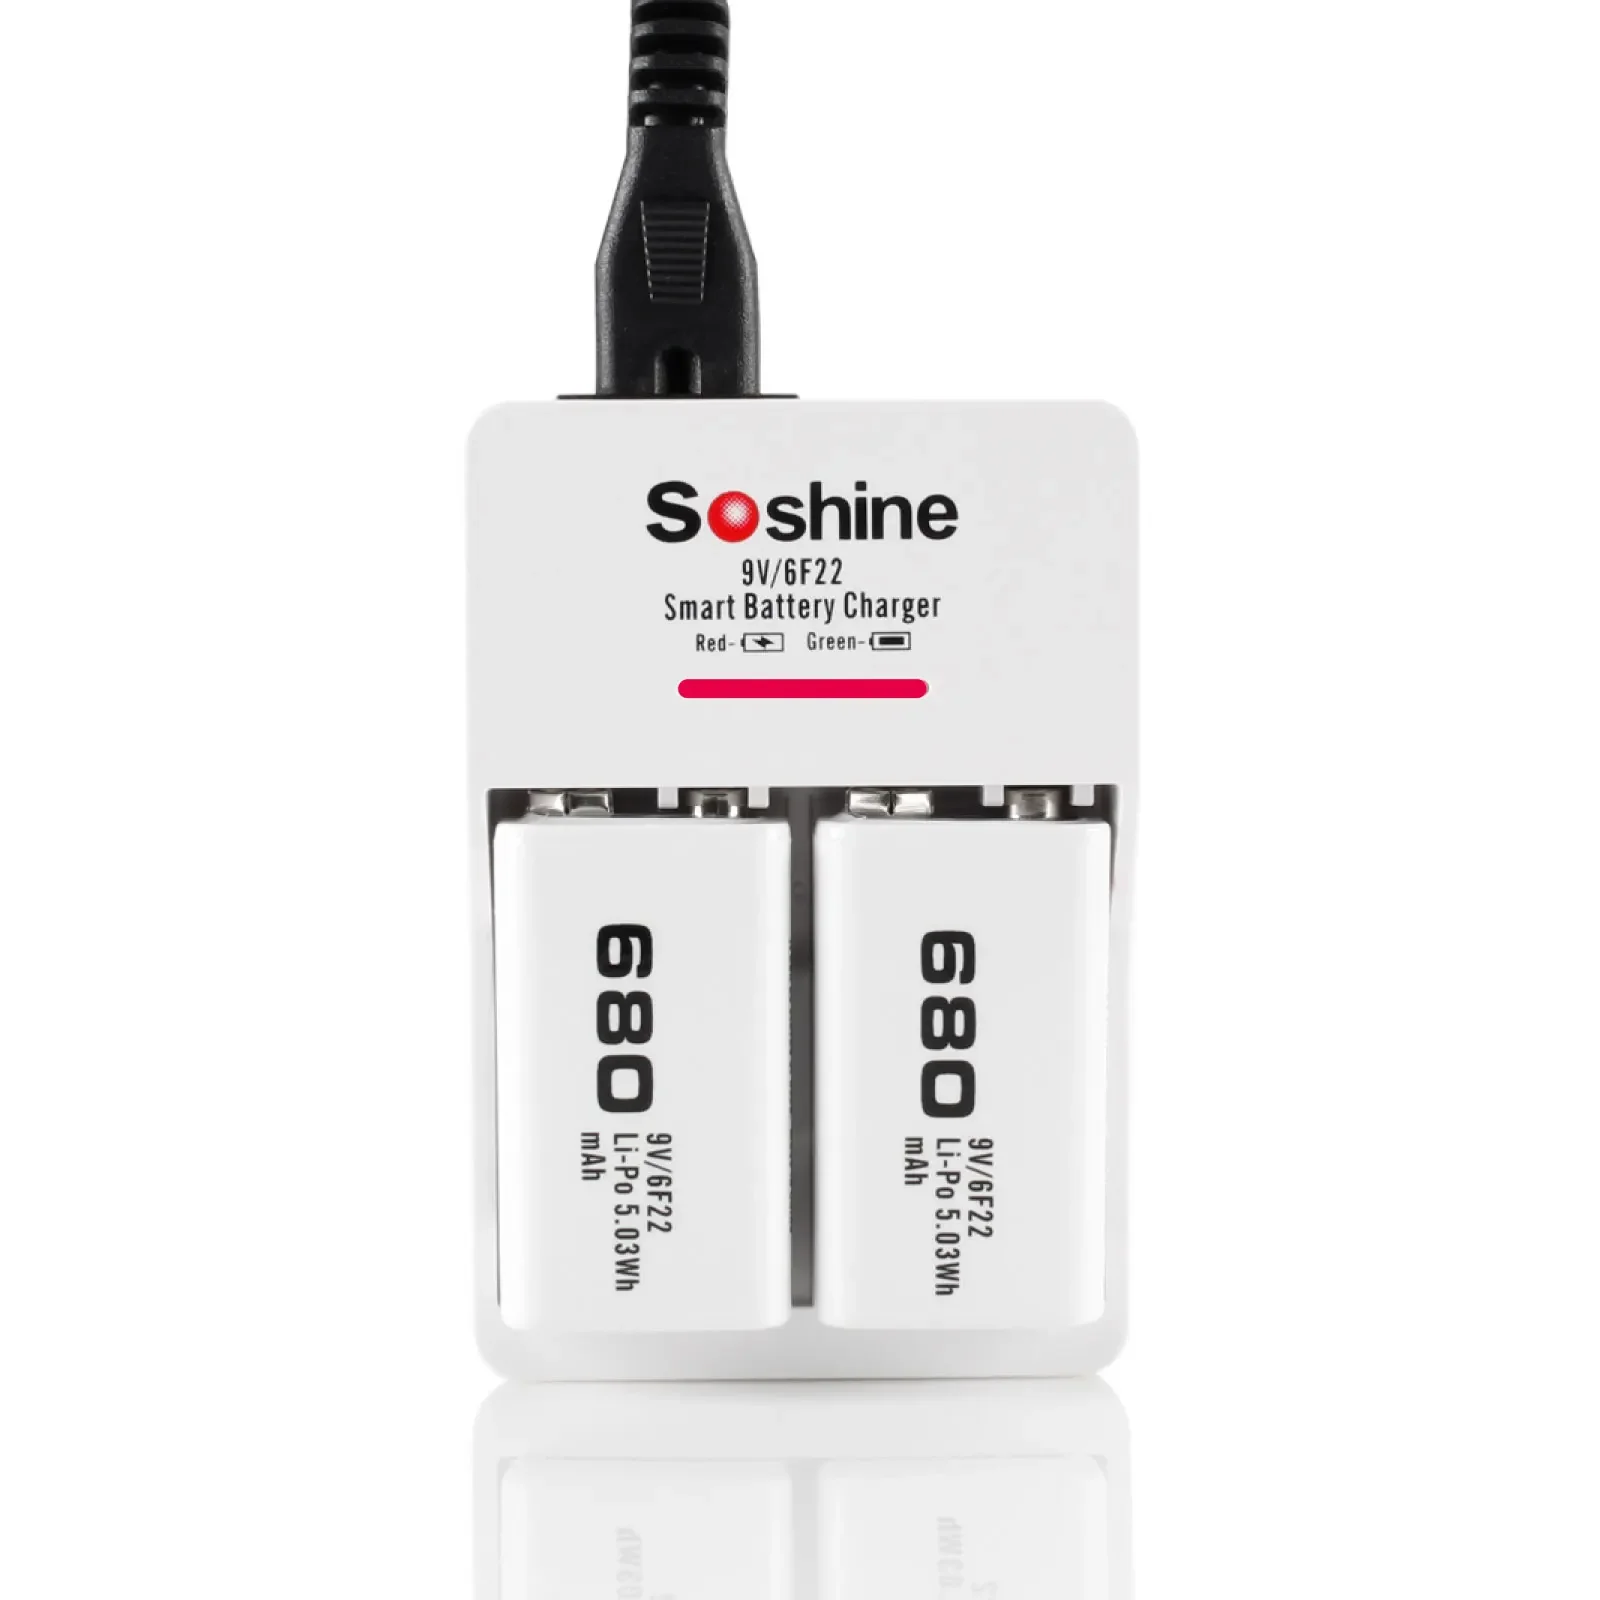 Soshine 6F22 9V 680mAh סוללה נטענת ו-2 חריצים חכם Li-Ion מטען עם LED 9 וולט סוללות עבור גלאי מתכות צעצוע - 1